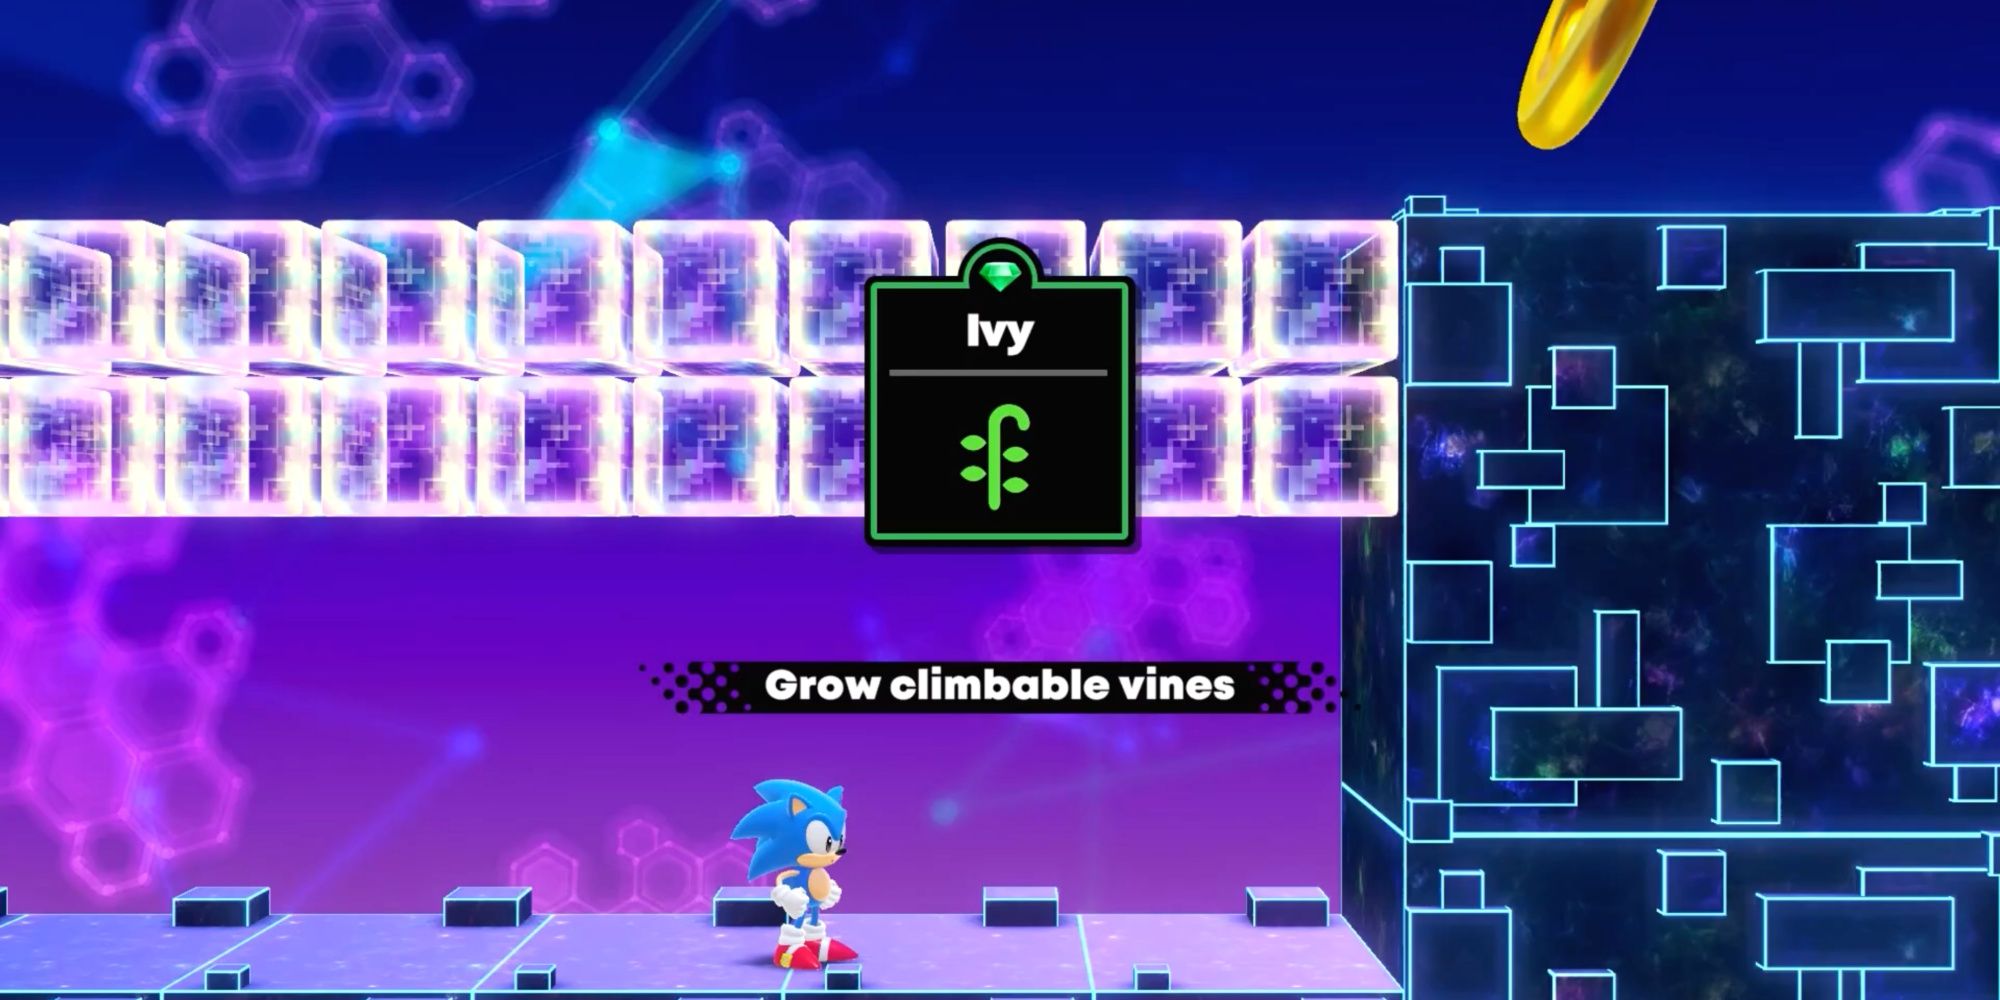 Unlocking Ivy Chaos Emerald power in Sonic Superstars